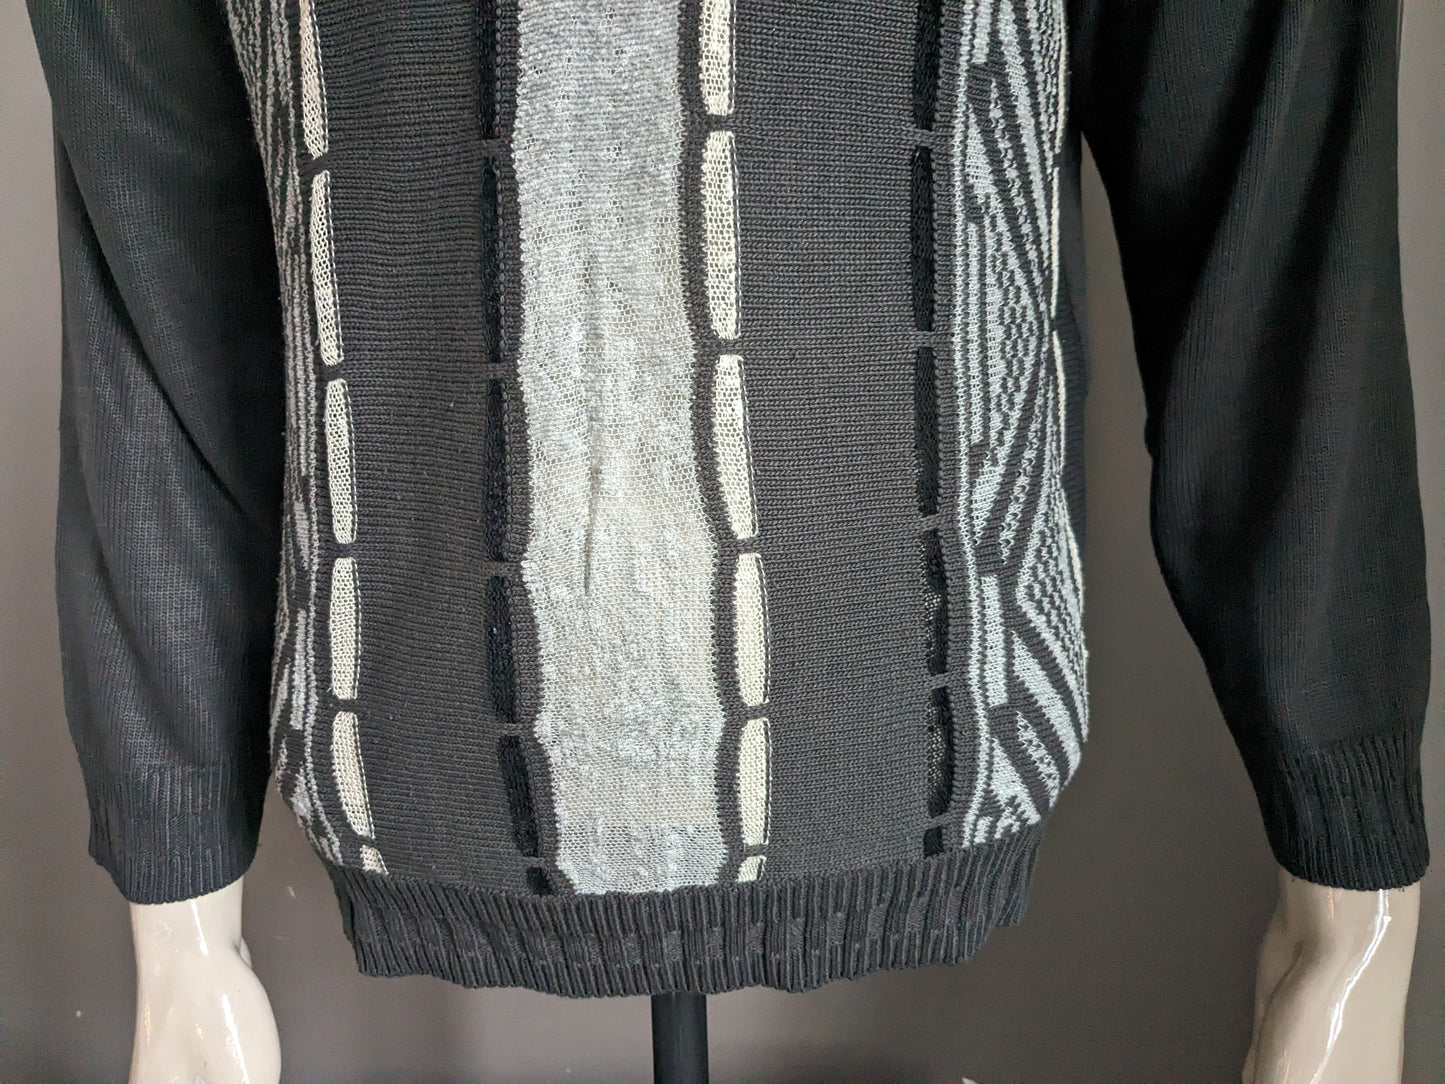 Suéter de sonne vintage con cremallera. Gray Beige de color negro. Talla L.